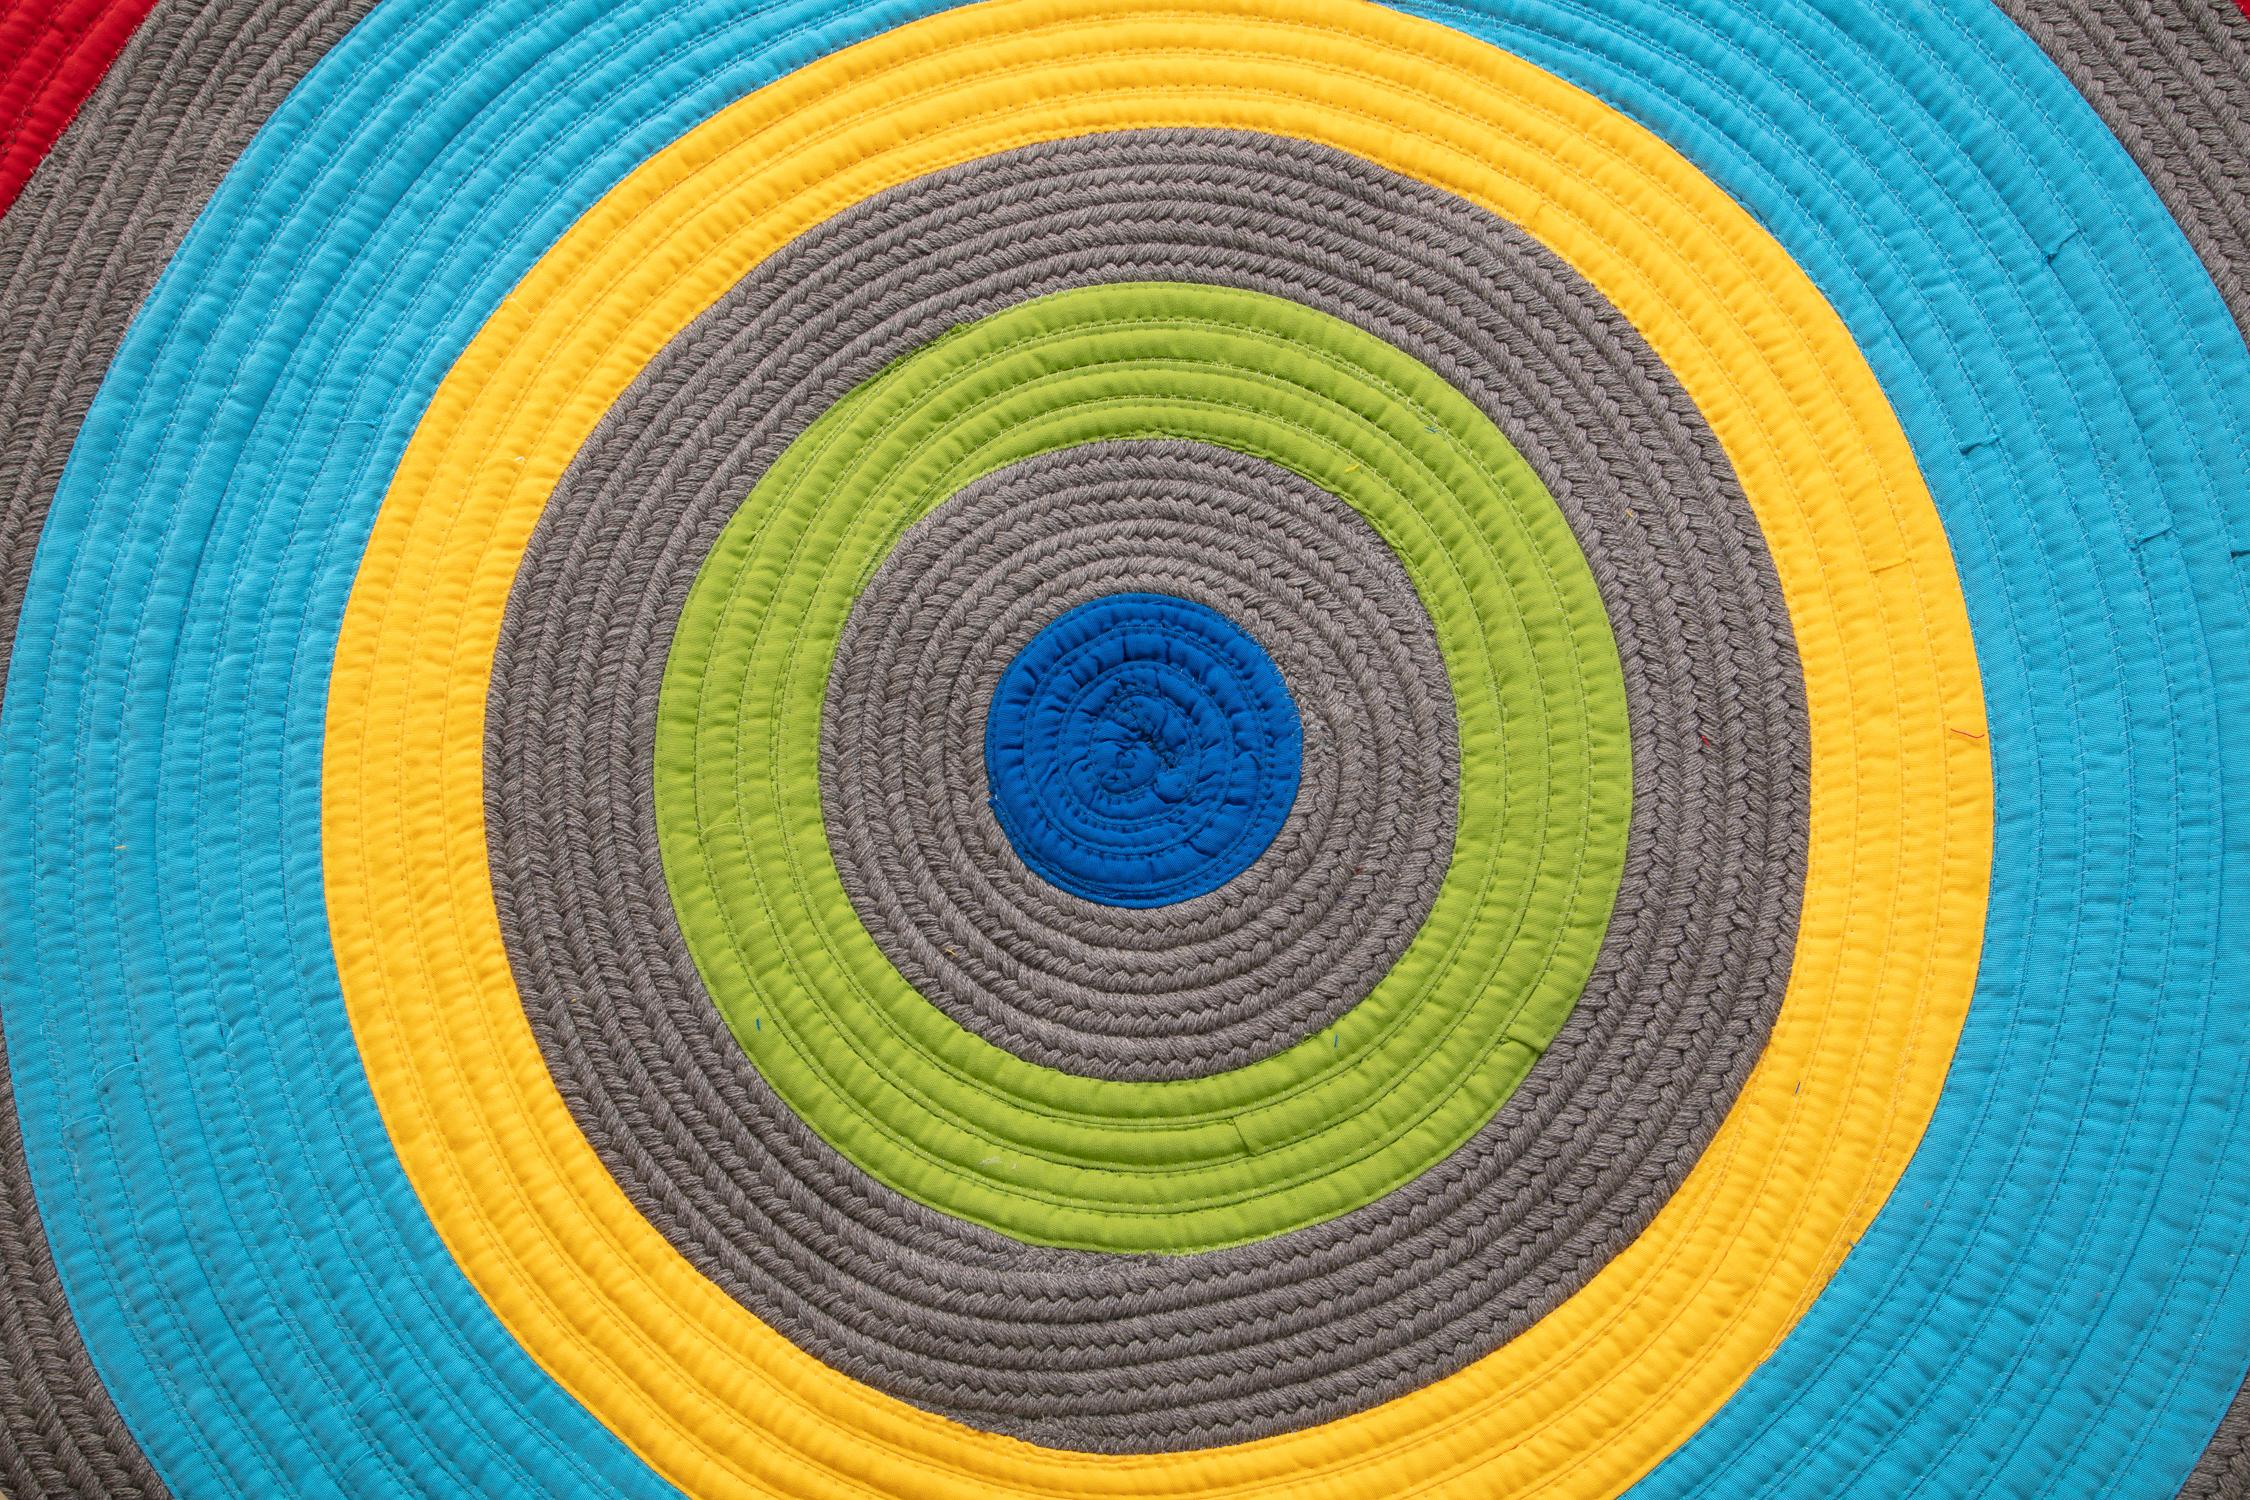 Rug by Liz Collins

2021

Materials: Sunbrella Acrylic Yarn & Fabric, Monofilament 

Dimensions: 100